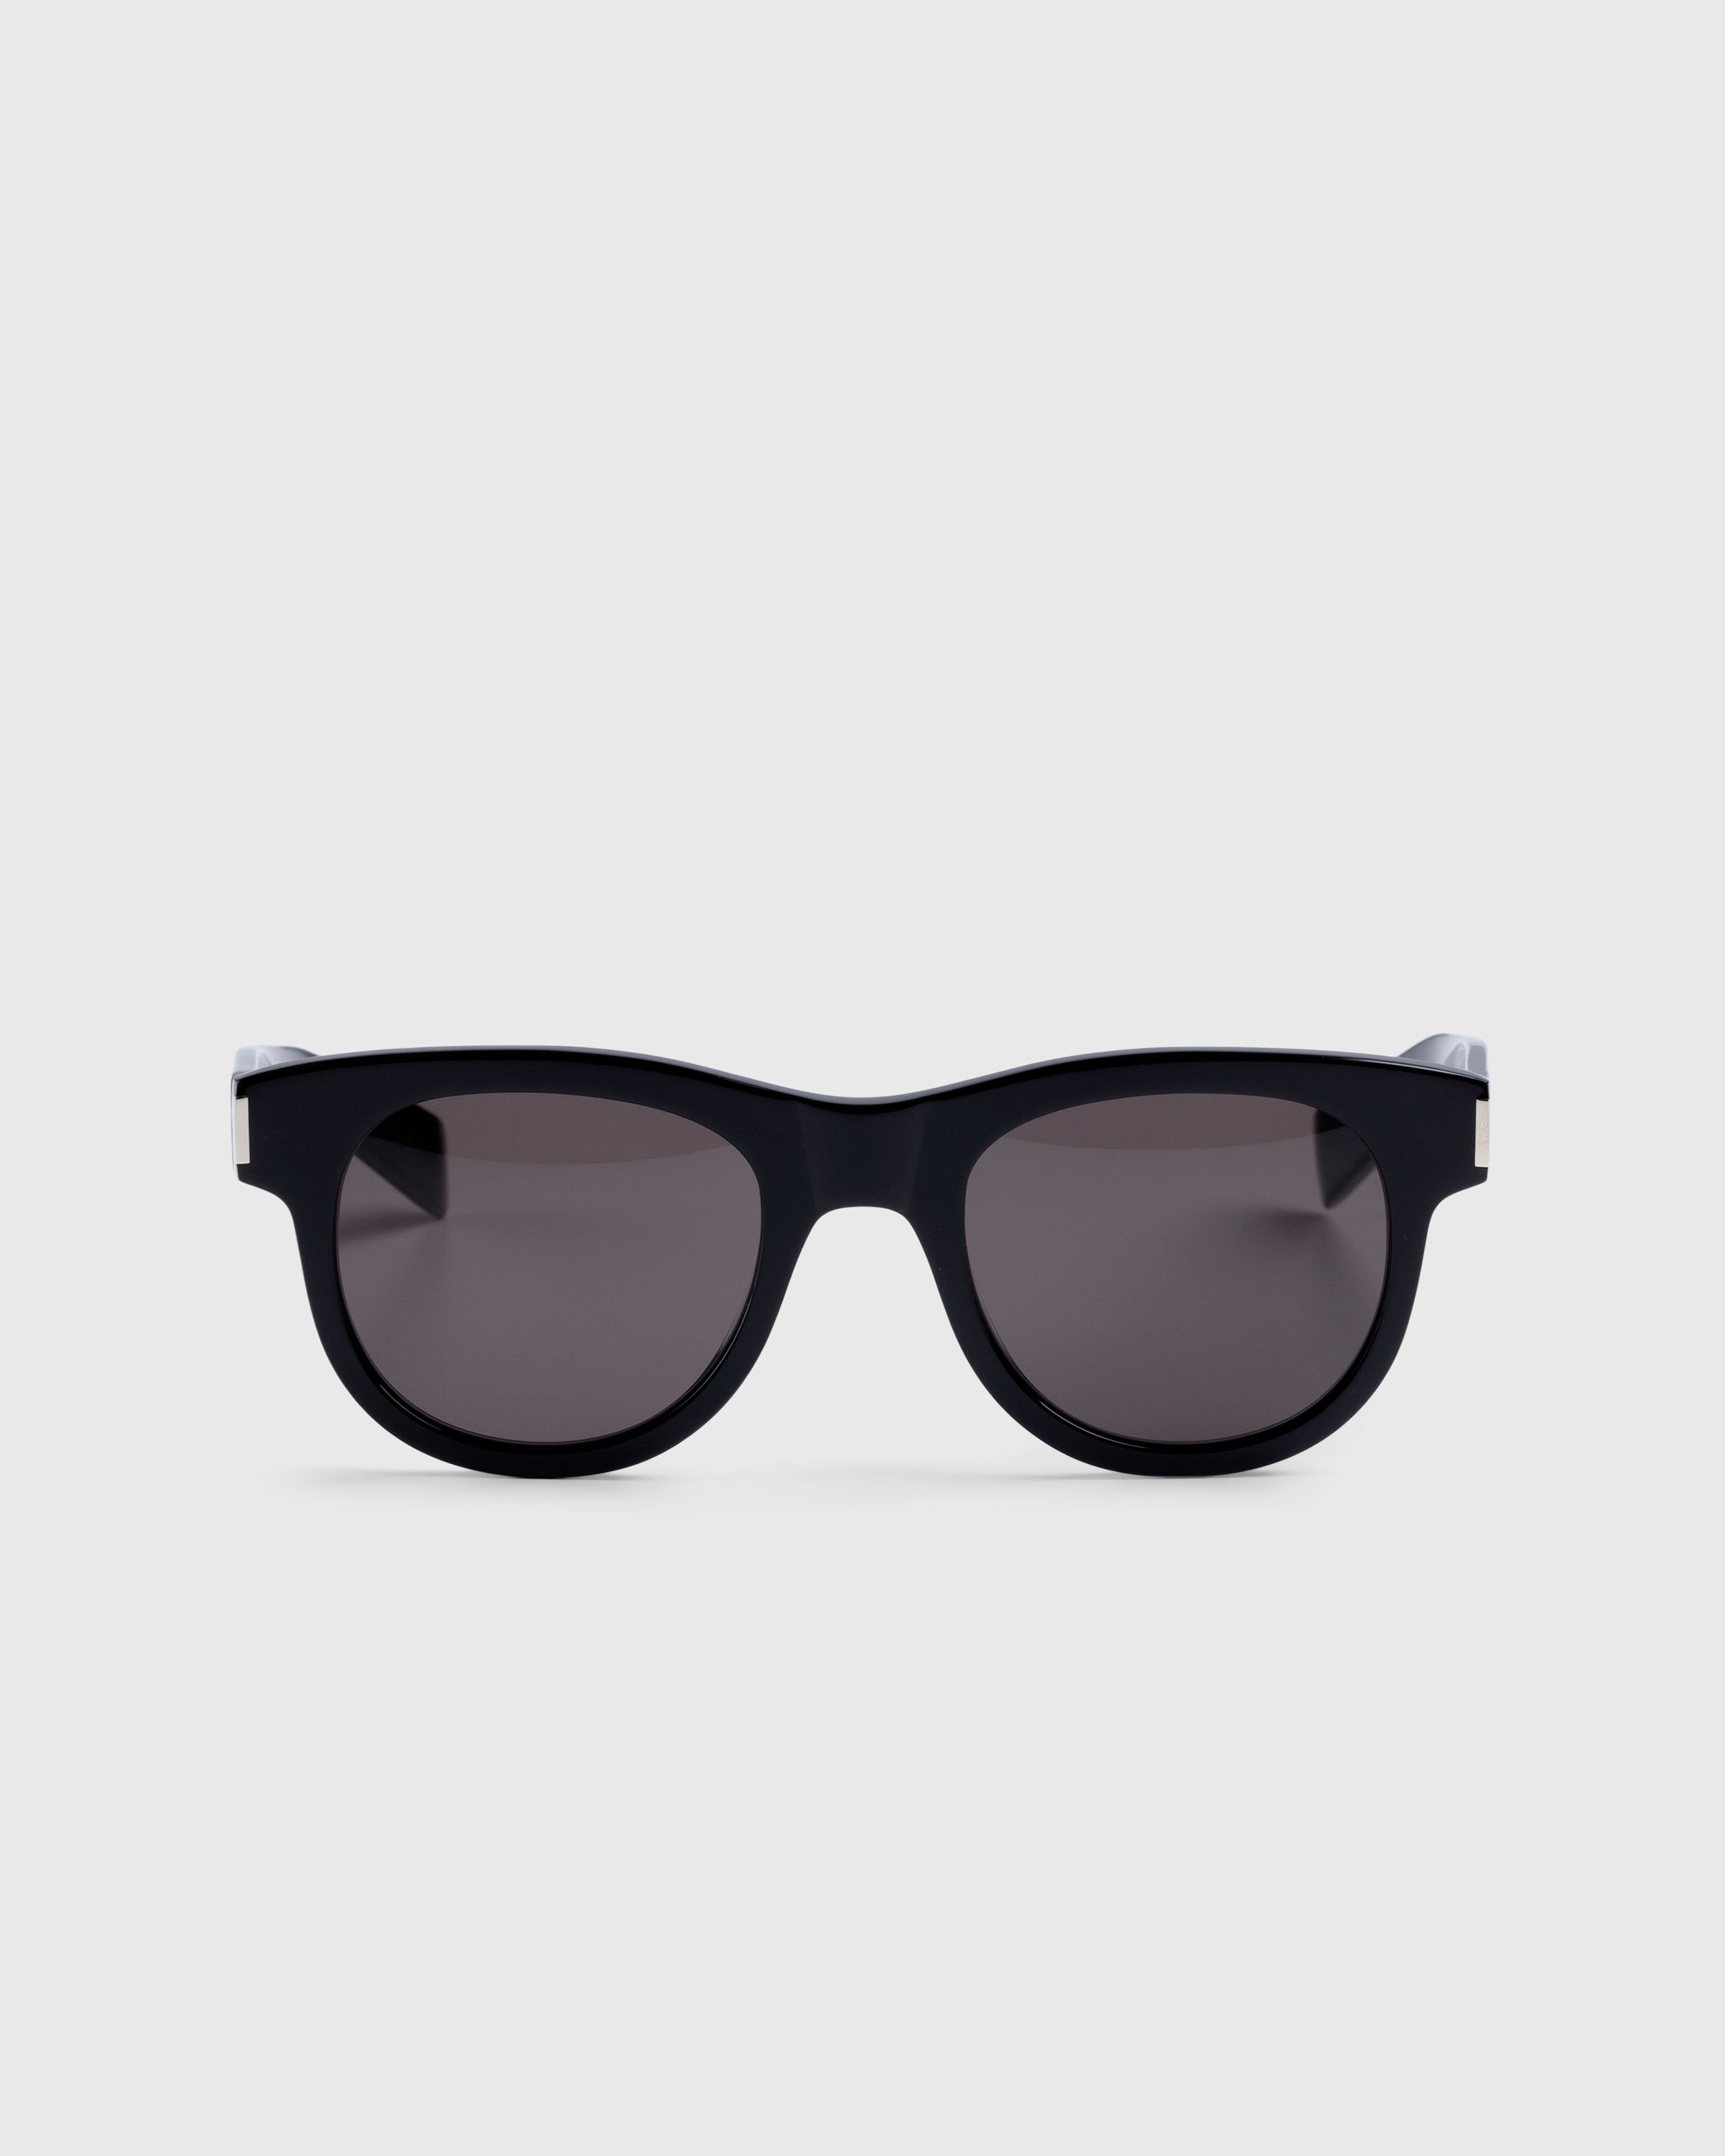 Saint Laurent - SL 571 Round Frame Sunglasses Black - Accessories - Black - Image 1